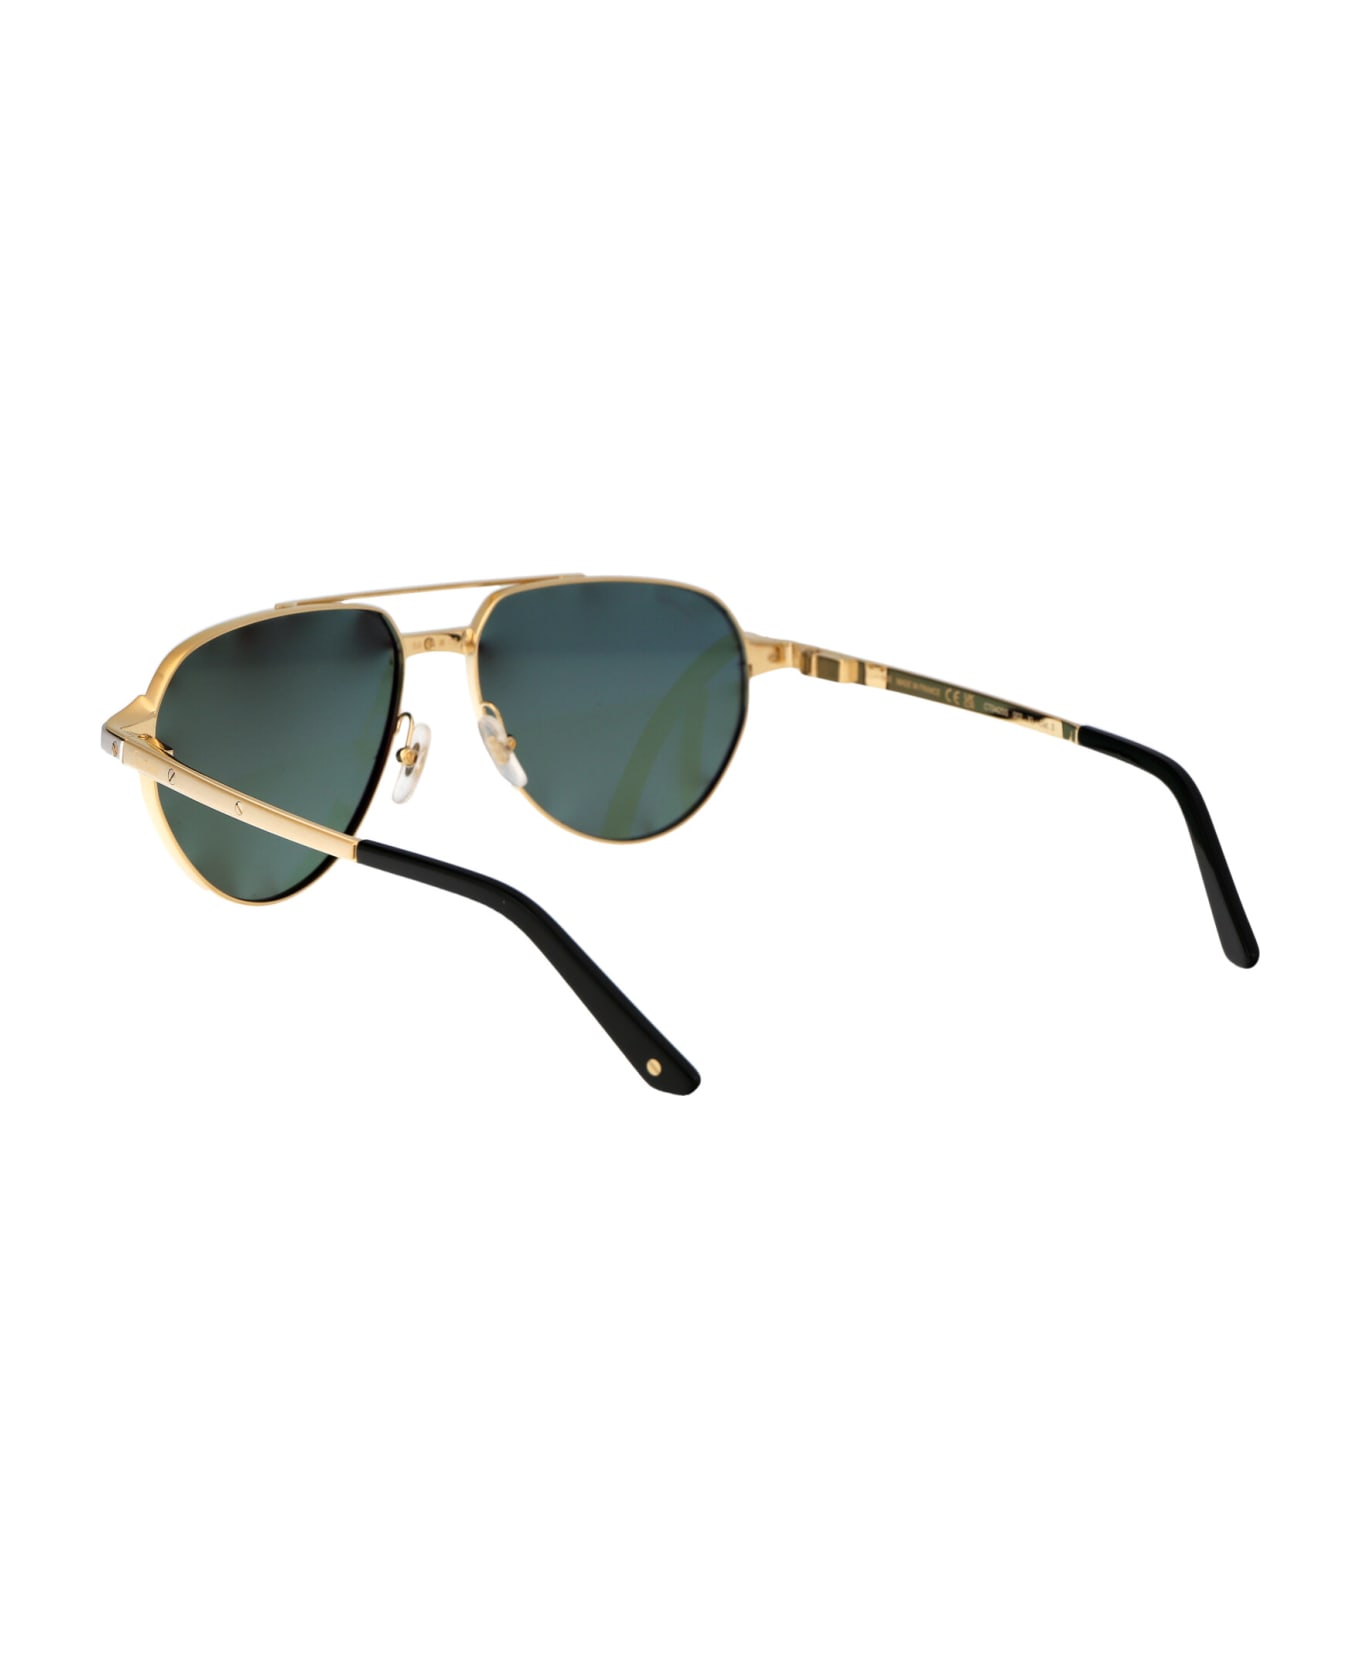 Cartier Eyewear Ct0425s Sunglasses - 002 GOLD GOLD GREEN サングラス